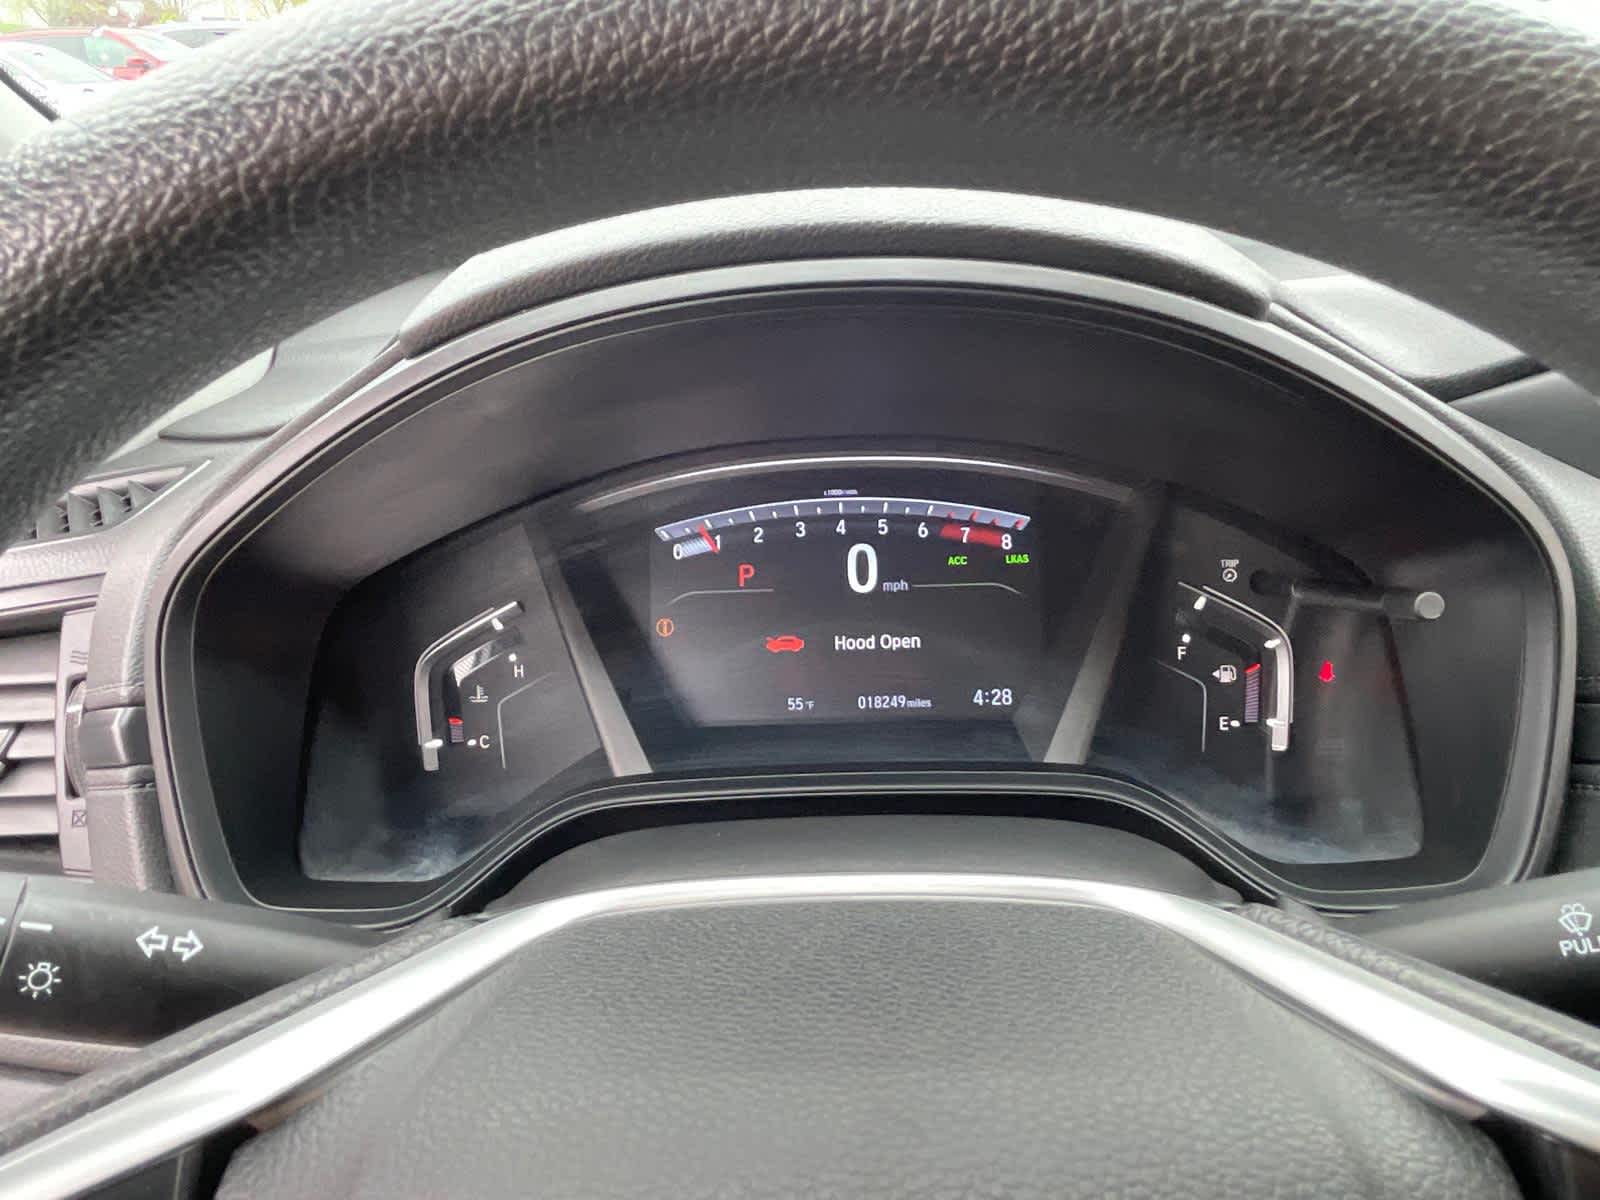 2020 Honda CR-V LX 8